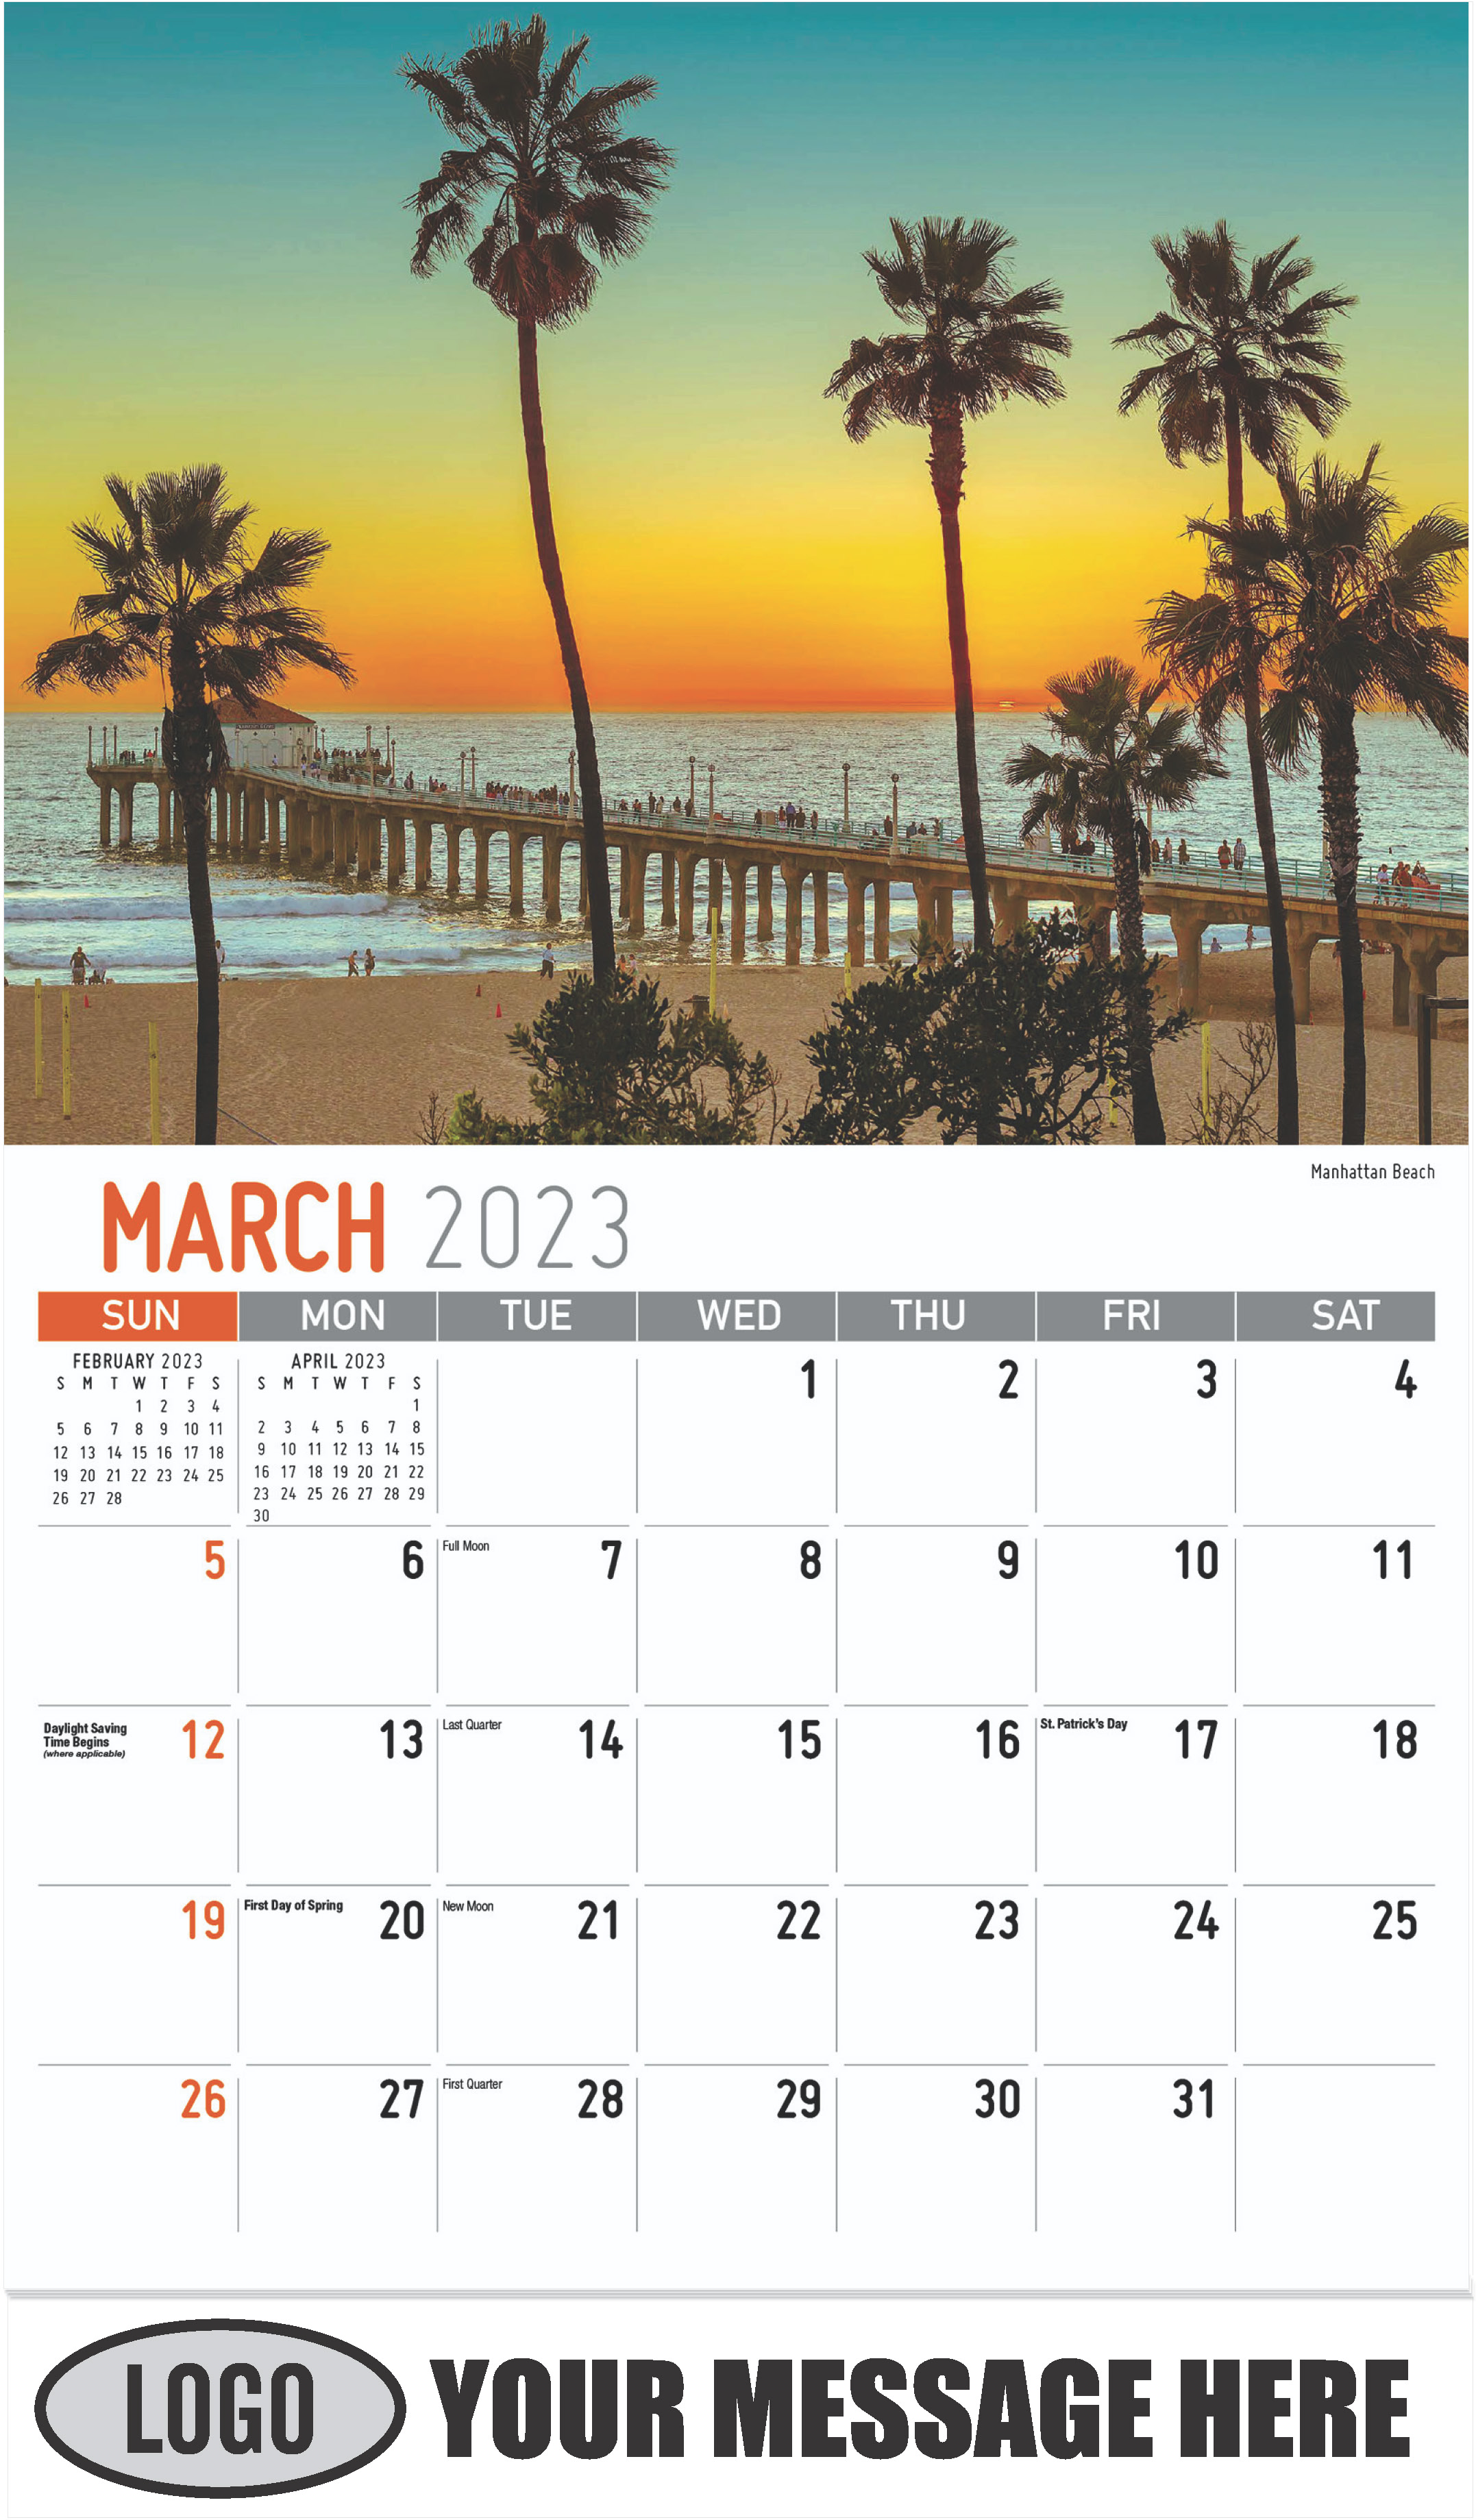 Manhattan Beach - March - Scenes of California 2023 Promotional Calendar